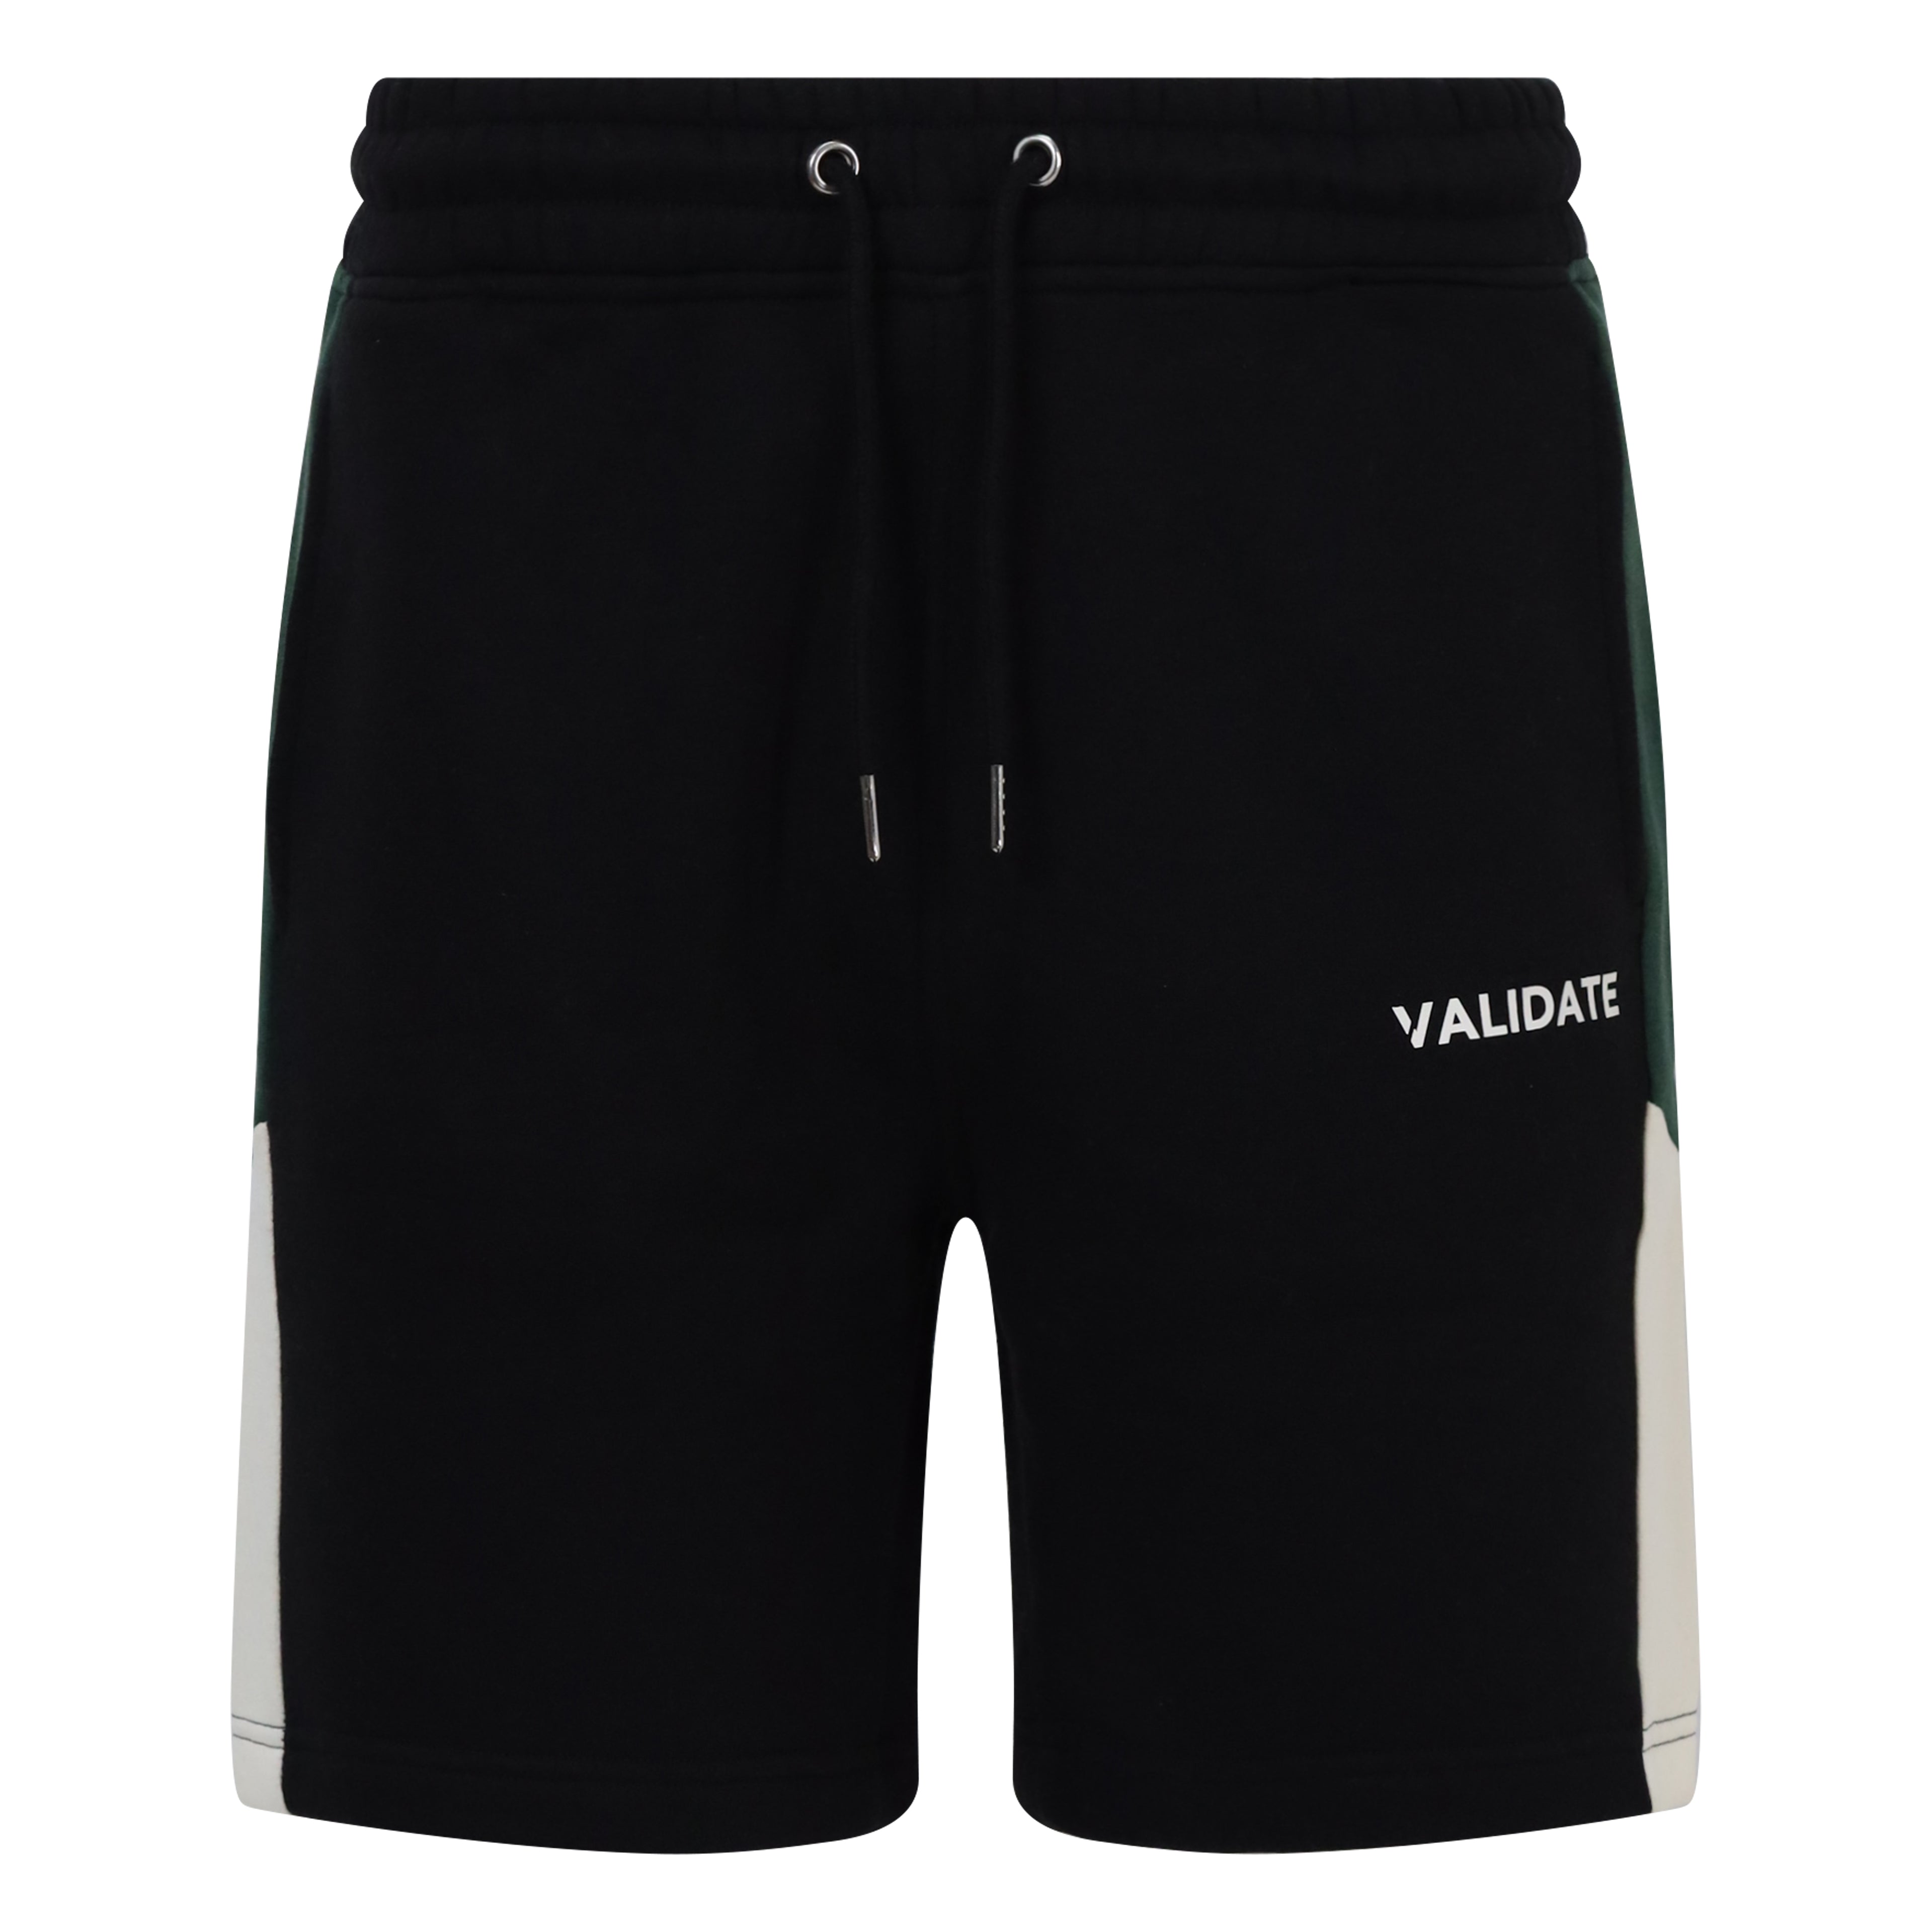 Validate Men's Colour Block Shorts Black